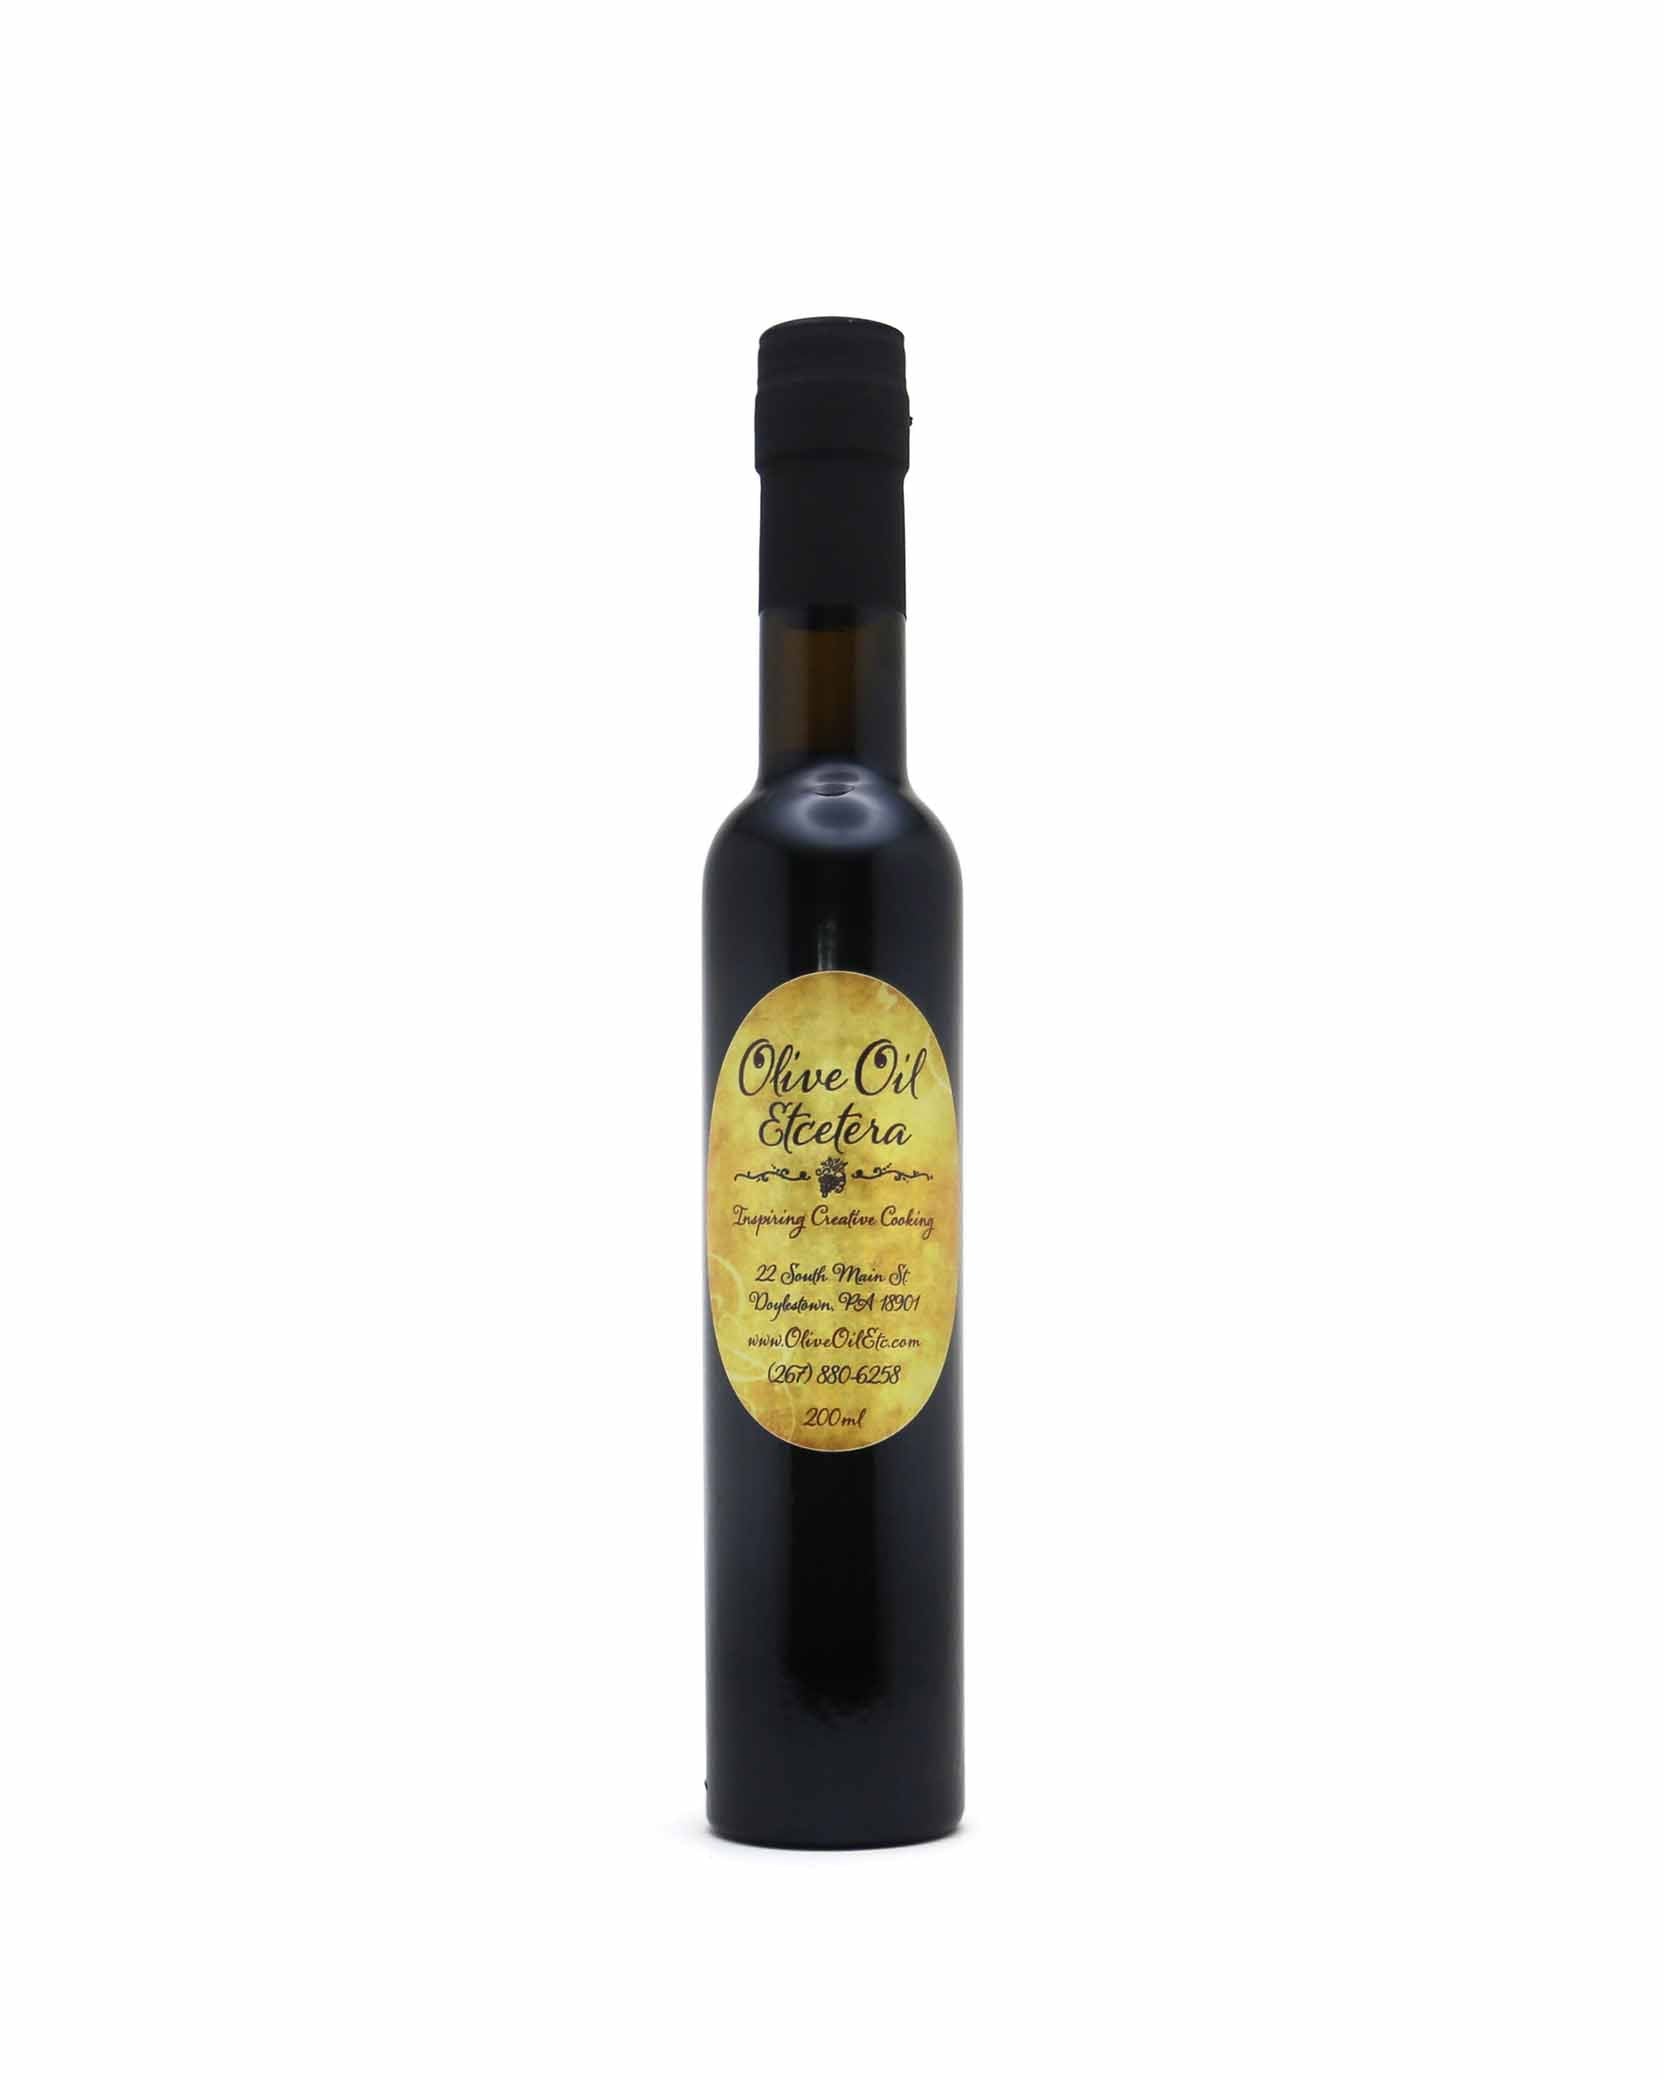 Basil Pesto Olive Oil - Olive Oil Etcetera 